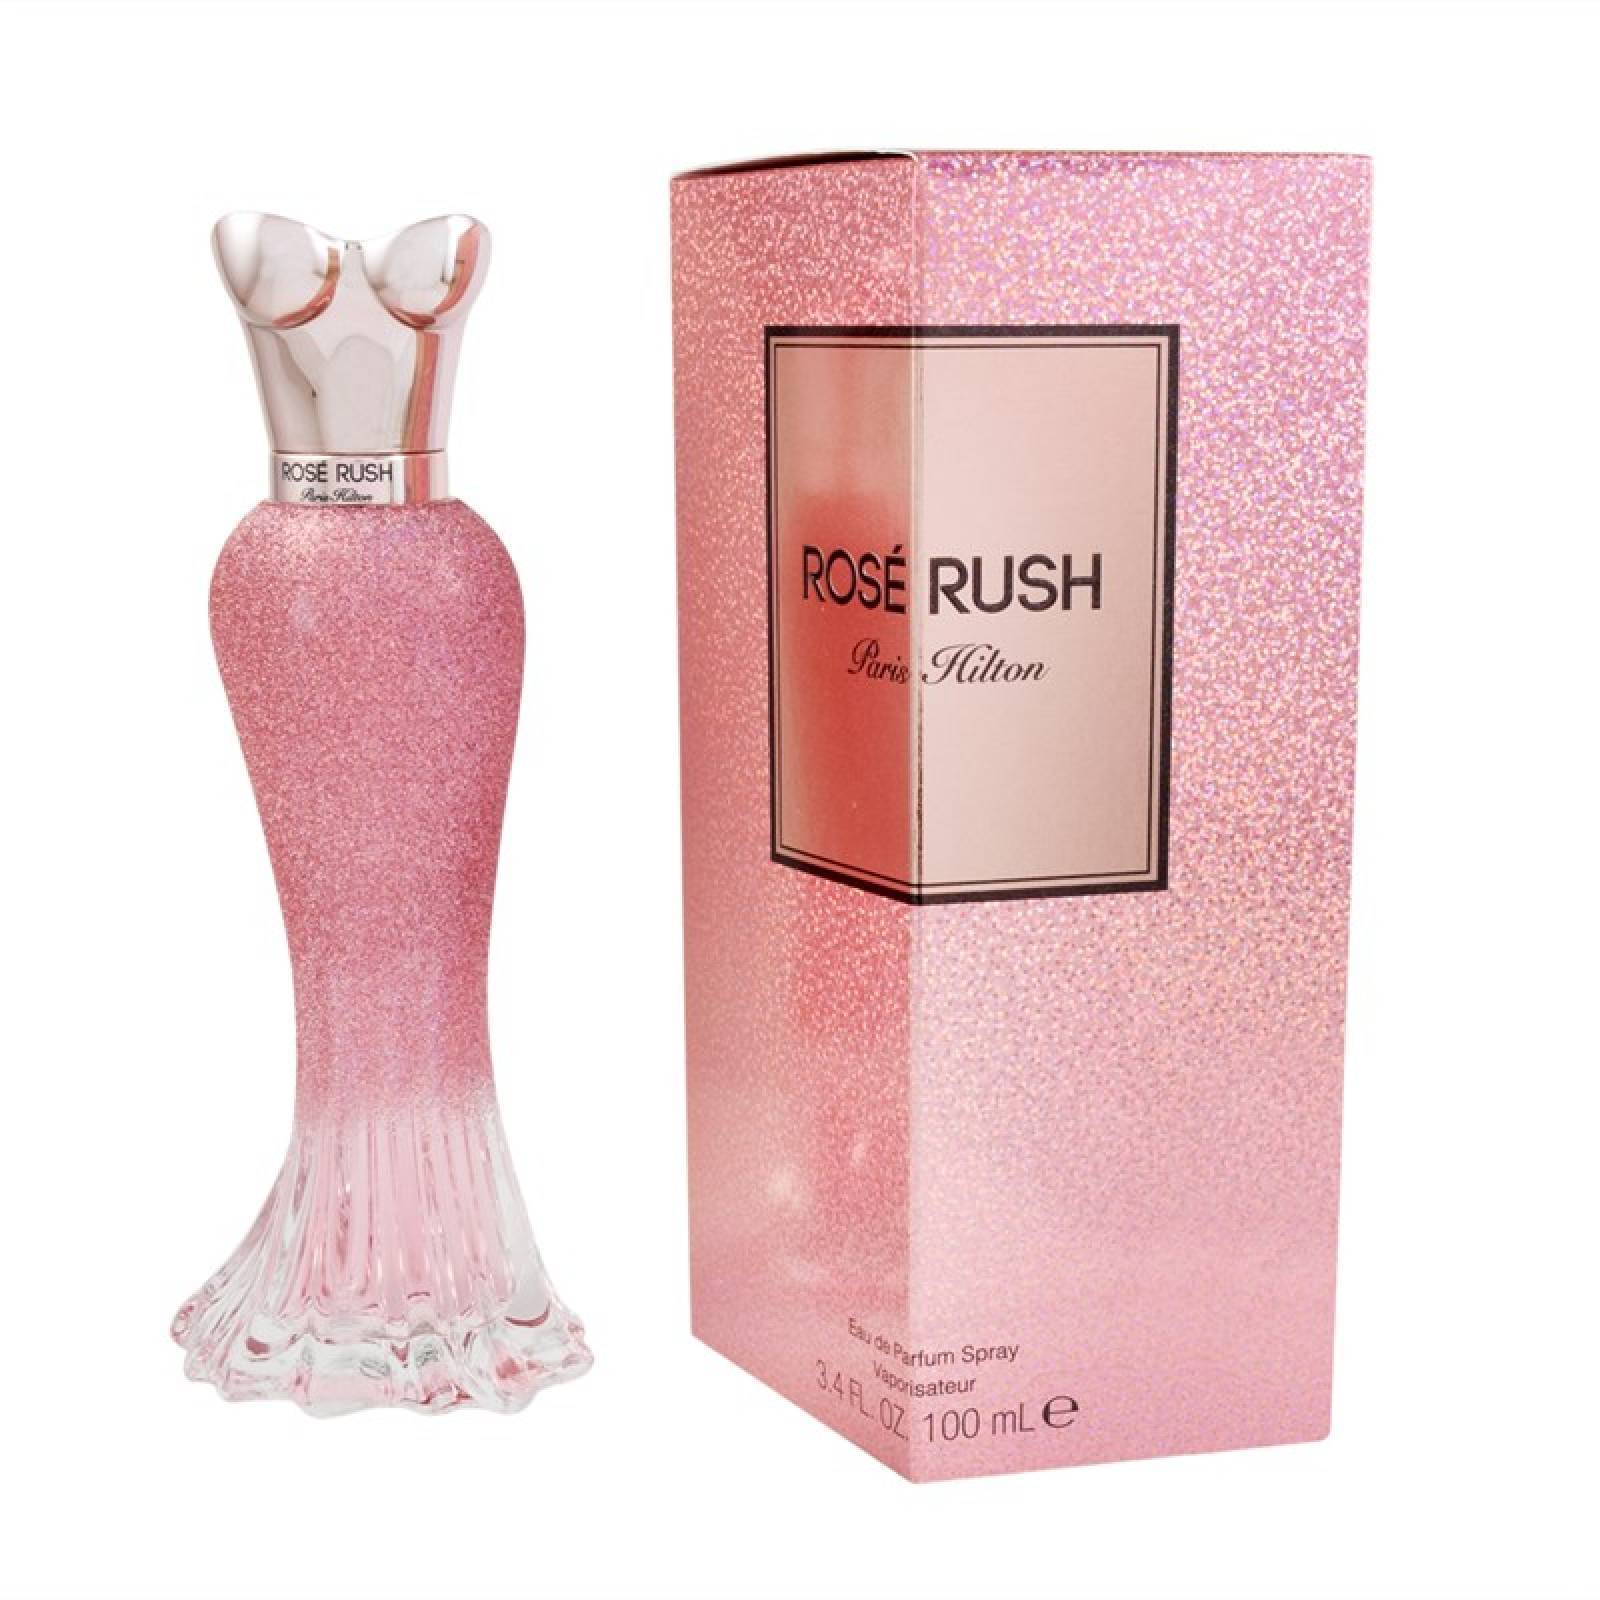 Rose Rush by Paris Hilton